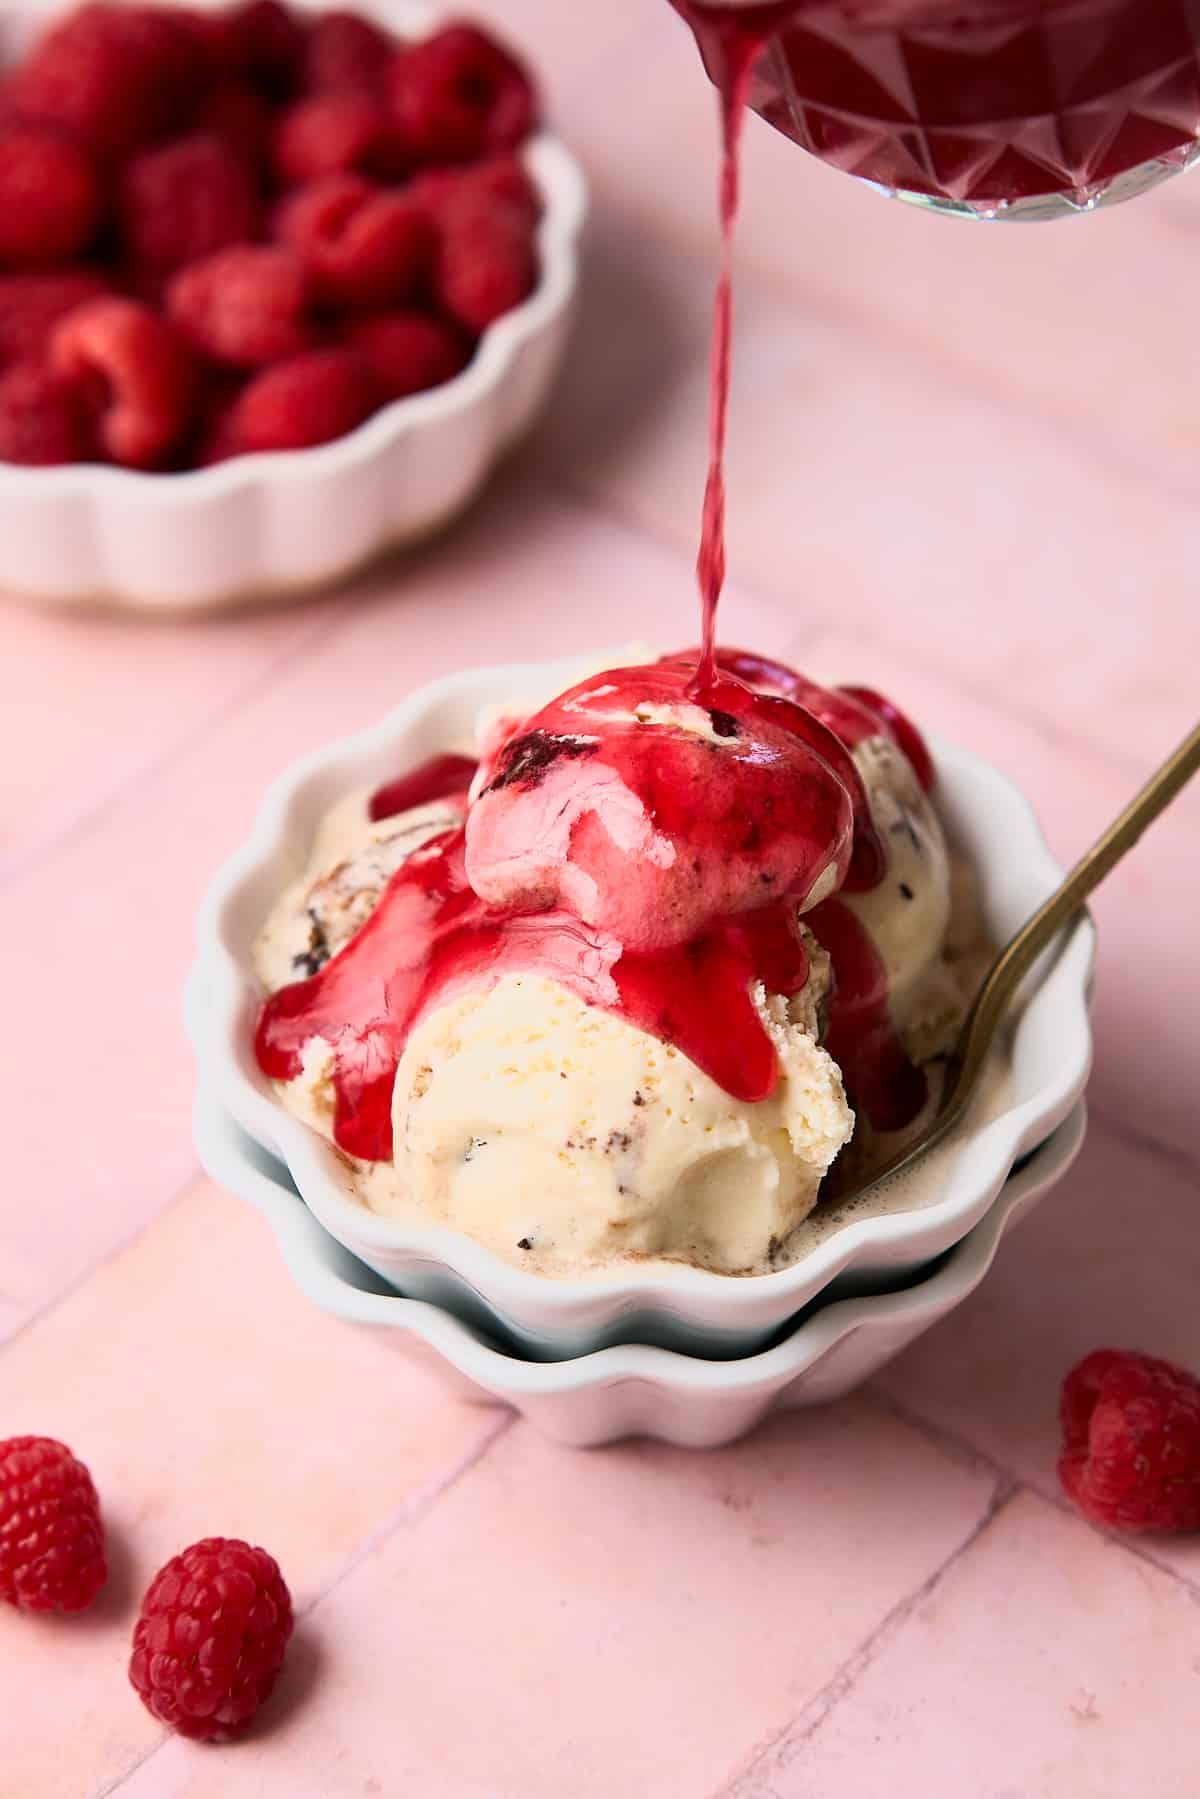 Raspberry syrup poured on top of vanilla ice cream.